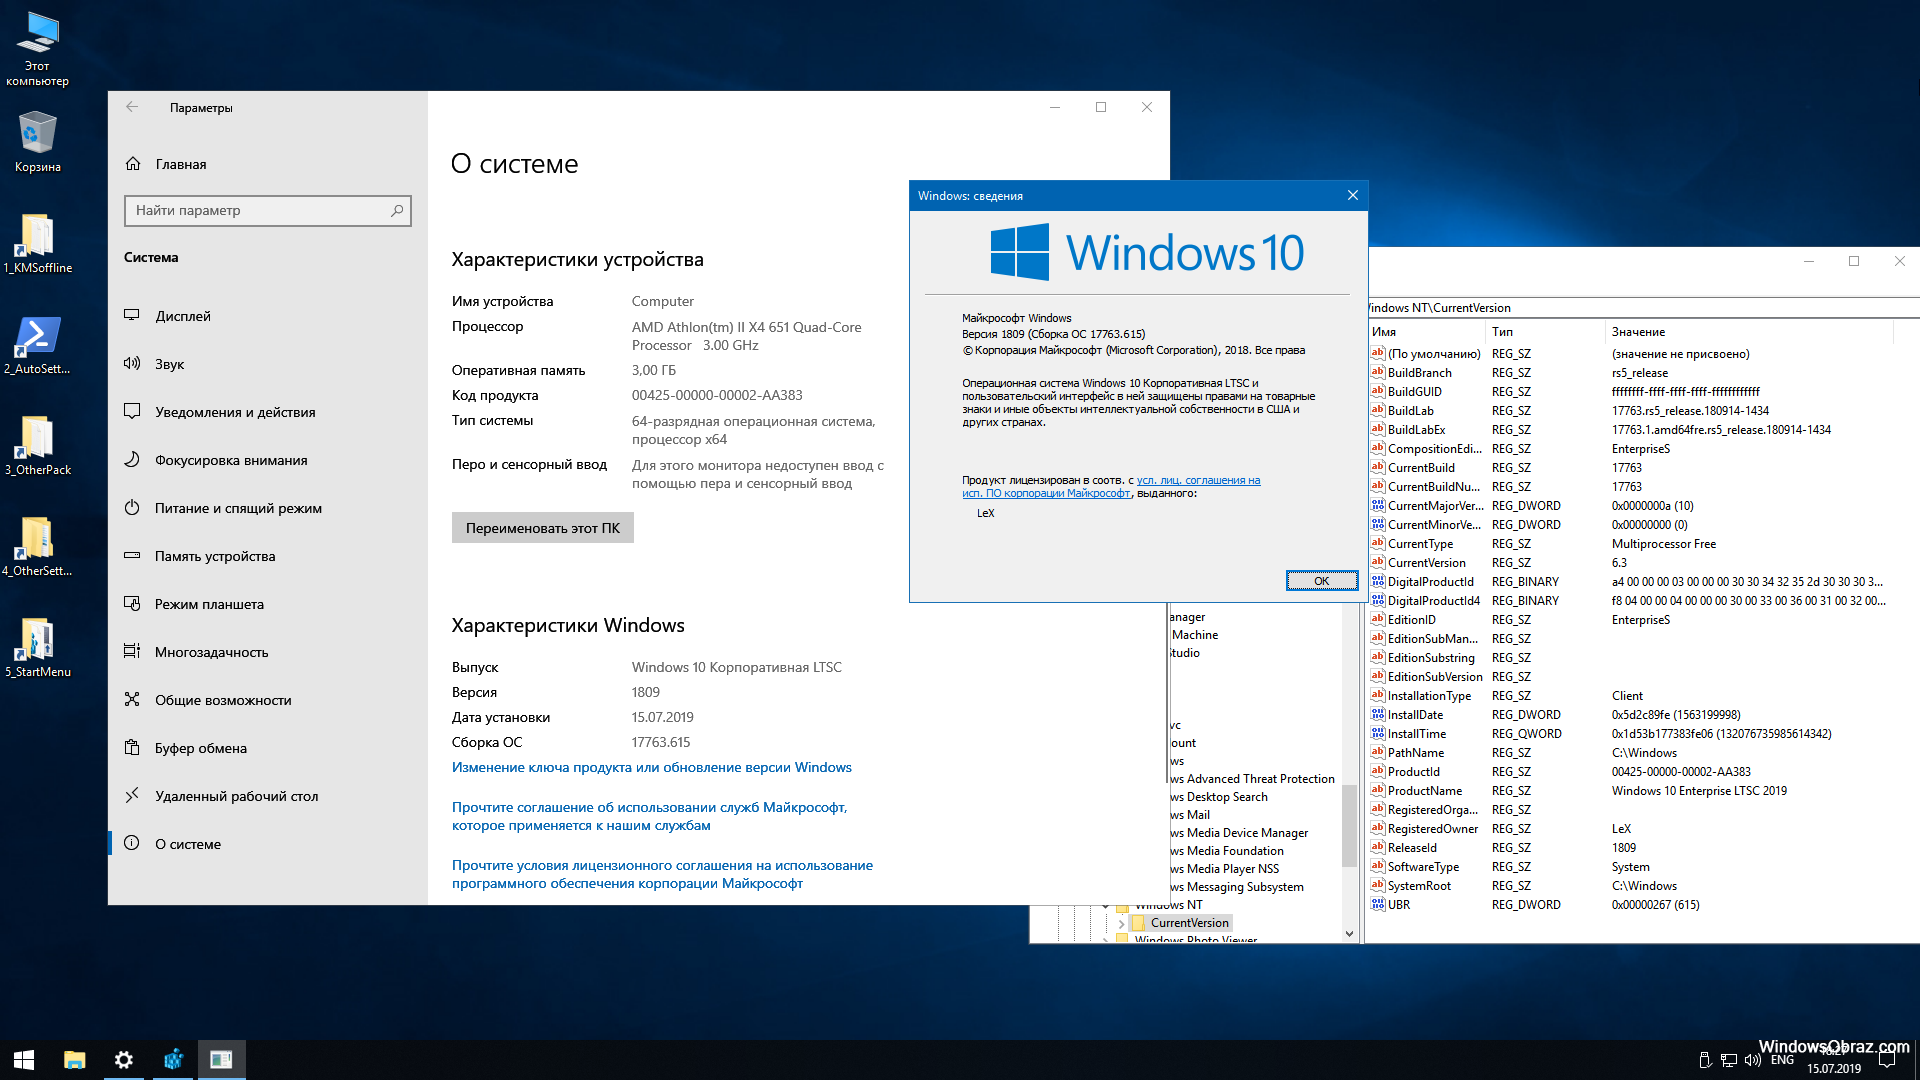 Система regs. Windows 10 корпоративная. Виндовс 10 корпоративная LTSC. Windows 10 Enterprise корпоративная) 64 bit. Windows 10 корпоративная LTSC 2019.